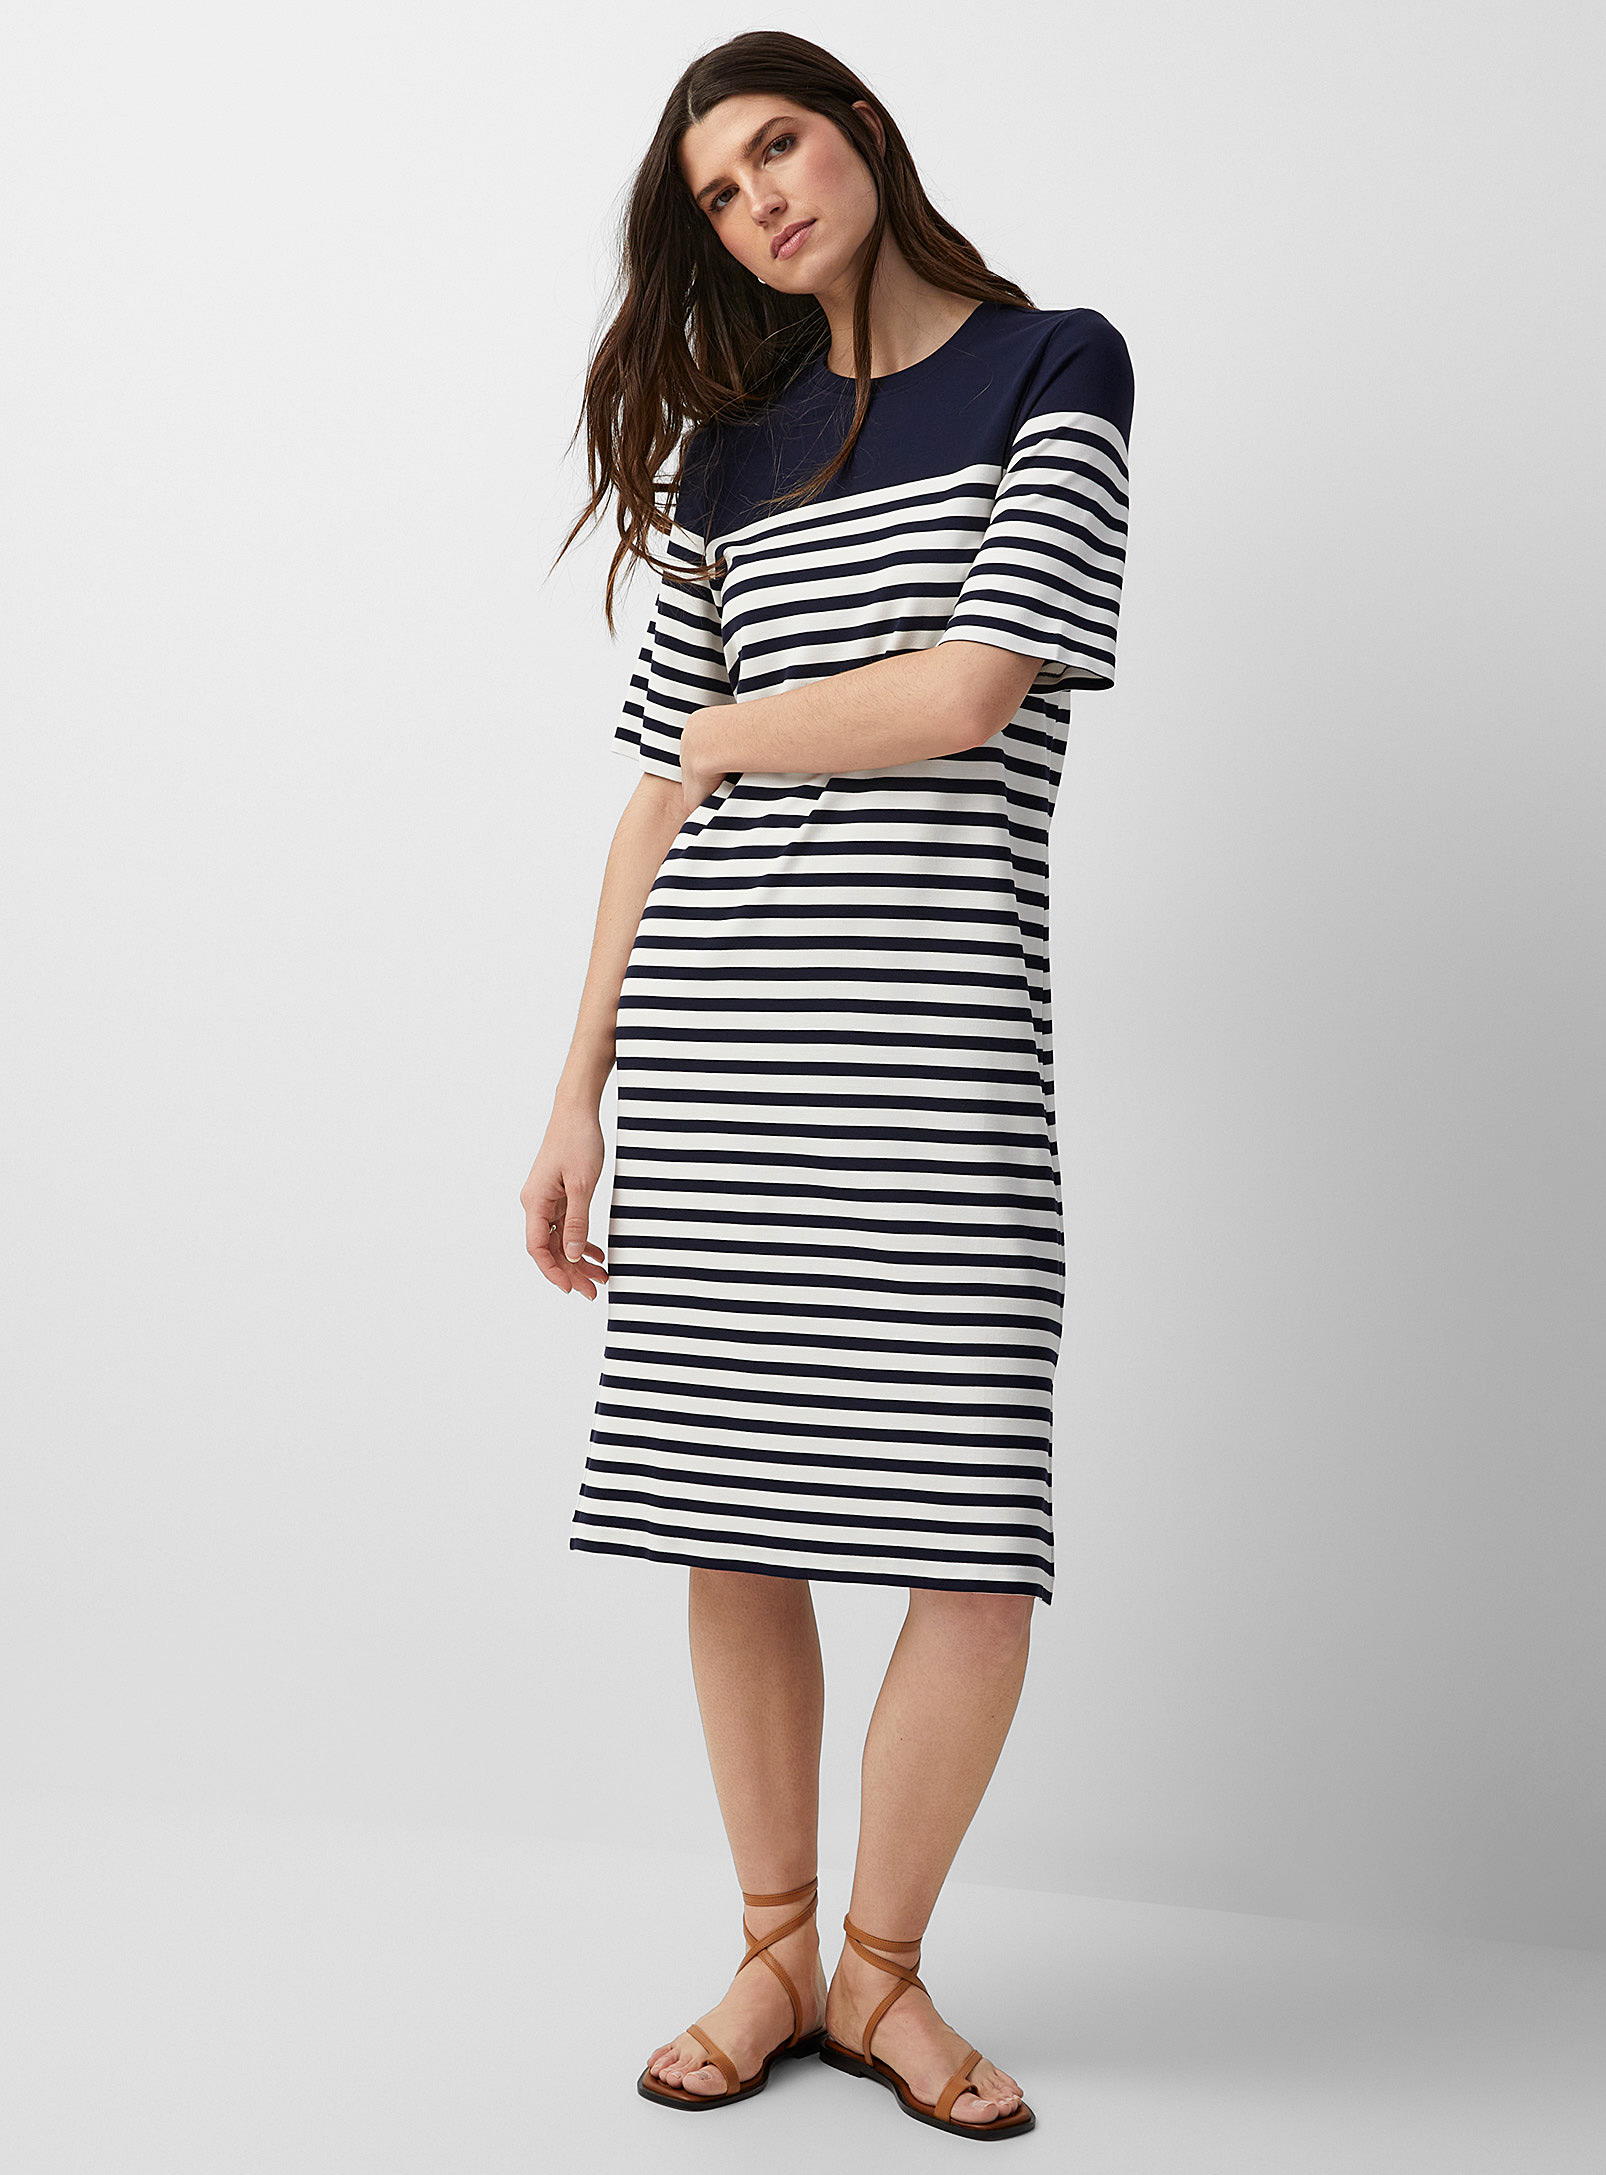 Contemporaine Two-tone Stripe Jersey Dress In Patterned Blue